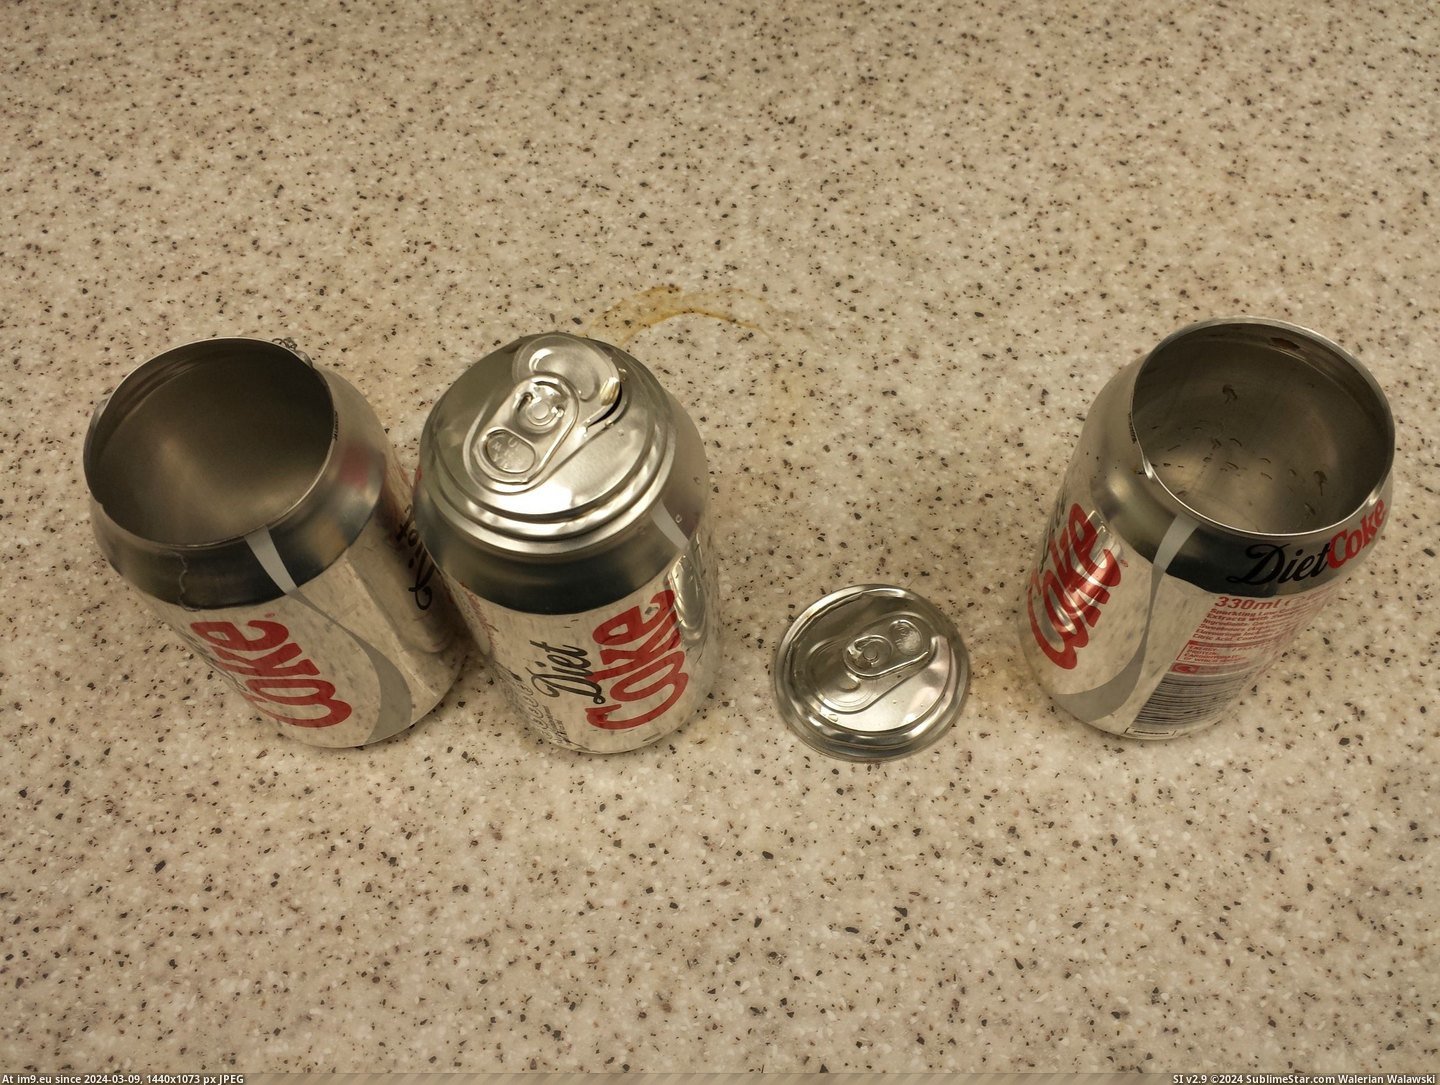 #Work #Way #Burst #Cans #Fridge [Mildlyinteresting] The cans in the fridge at work burst open in a way I've never seen 4 Pic. (Изображение из альбом My r/MILDLYINTERESTING favs))